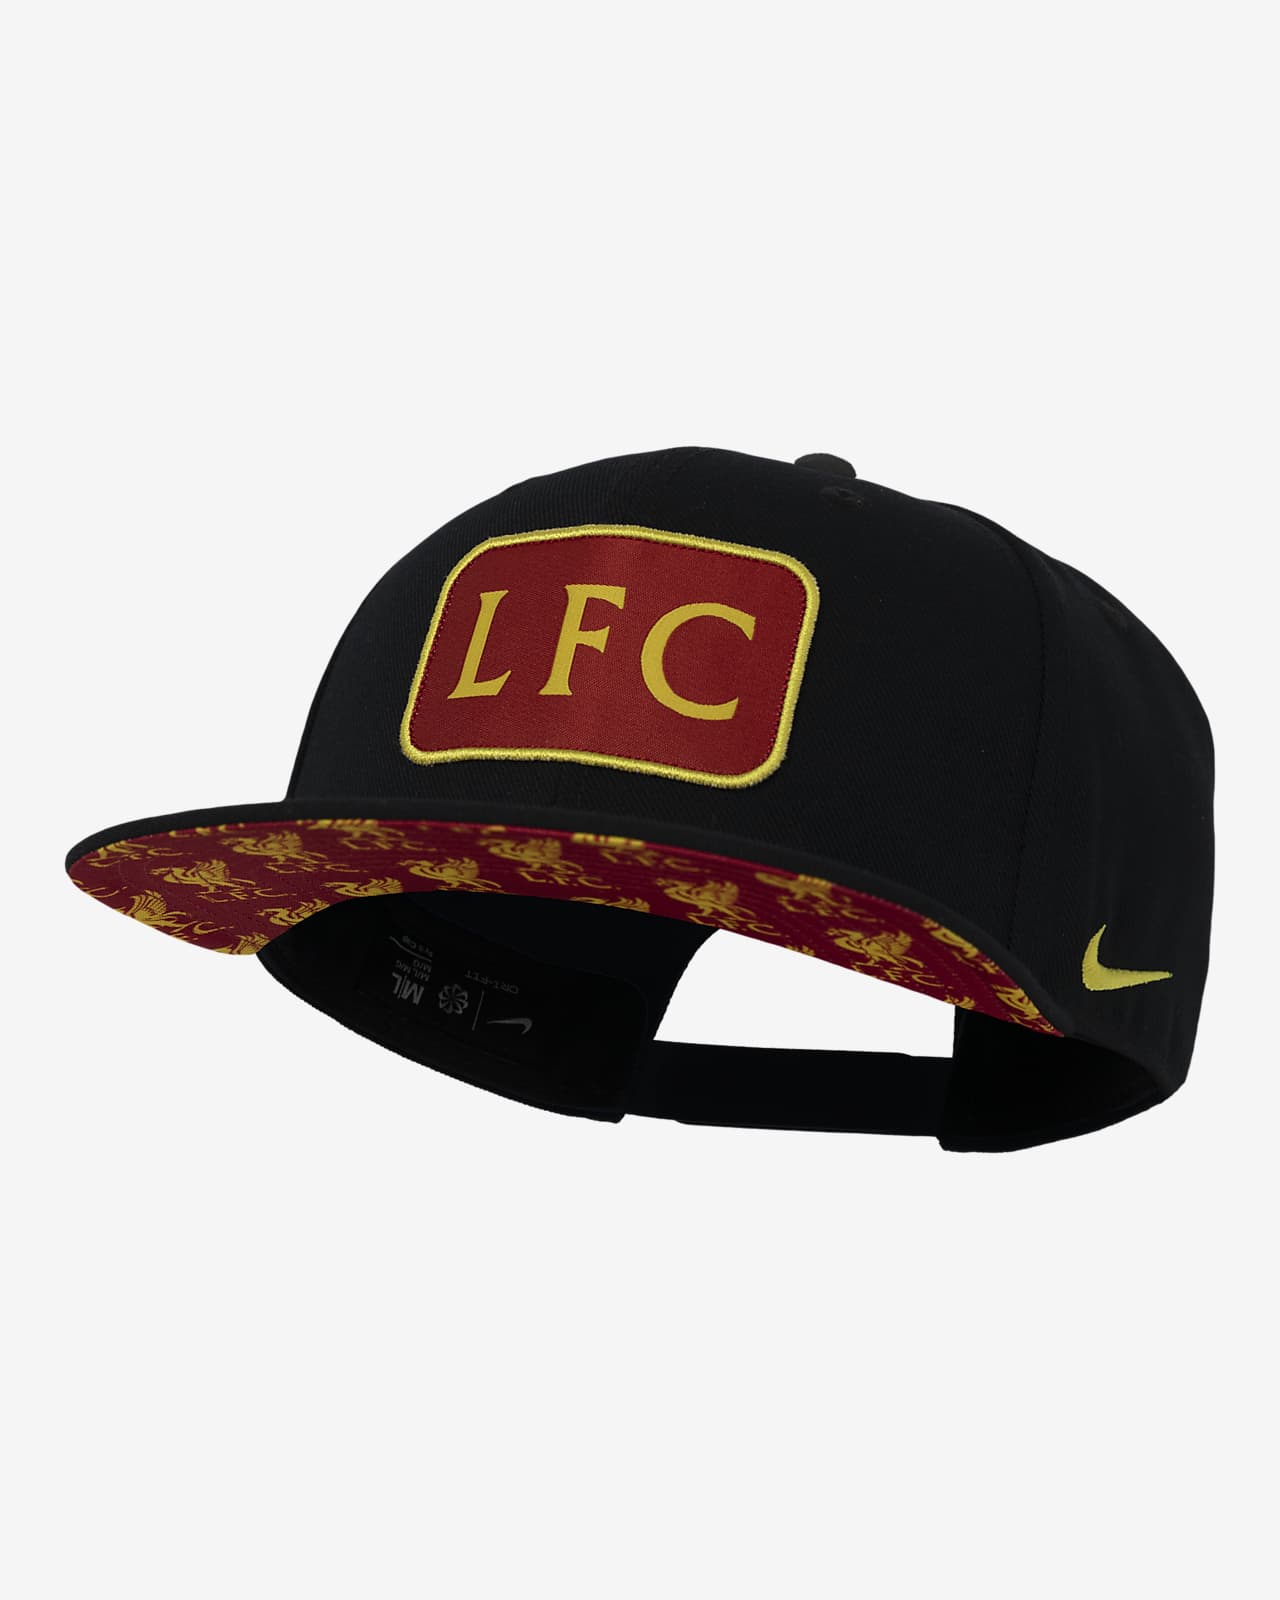 Liverpool FC Pro Nike Soccer Cap